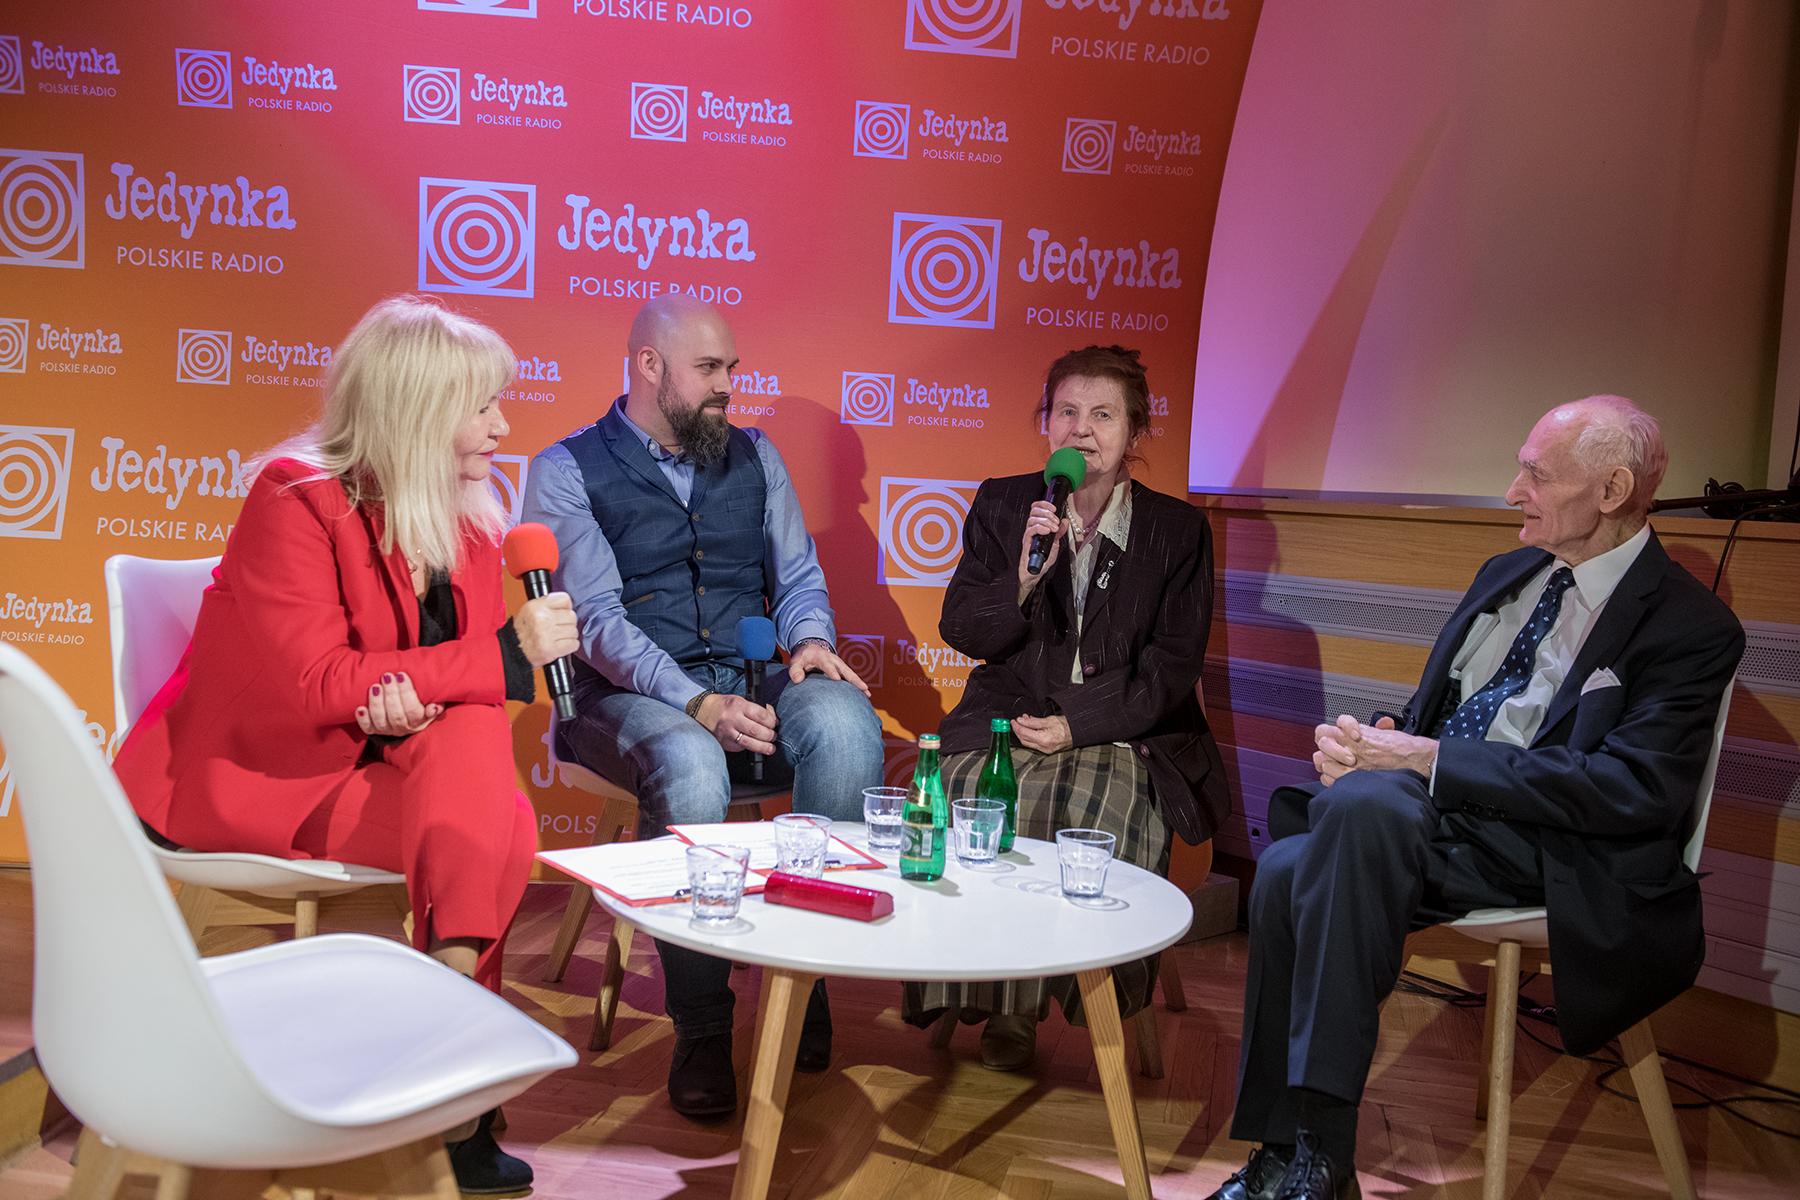 Maria Szabłowska, Marcin Kusy, Danuta Lubecka i Olgierd Buczek